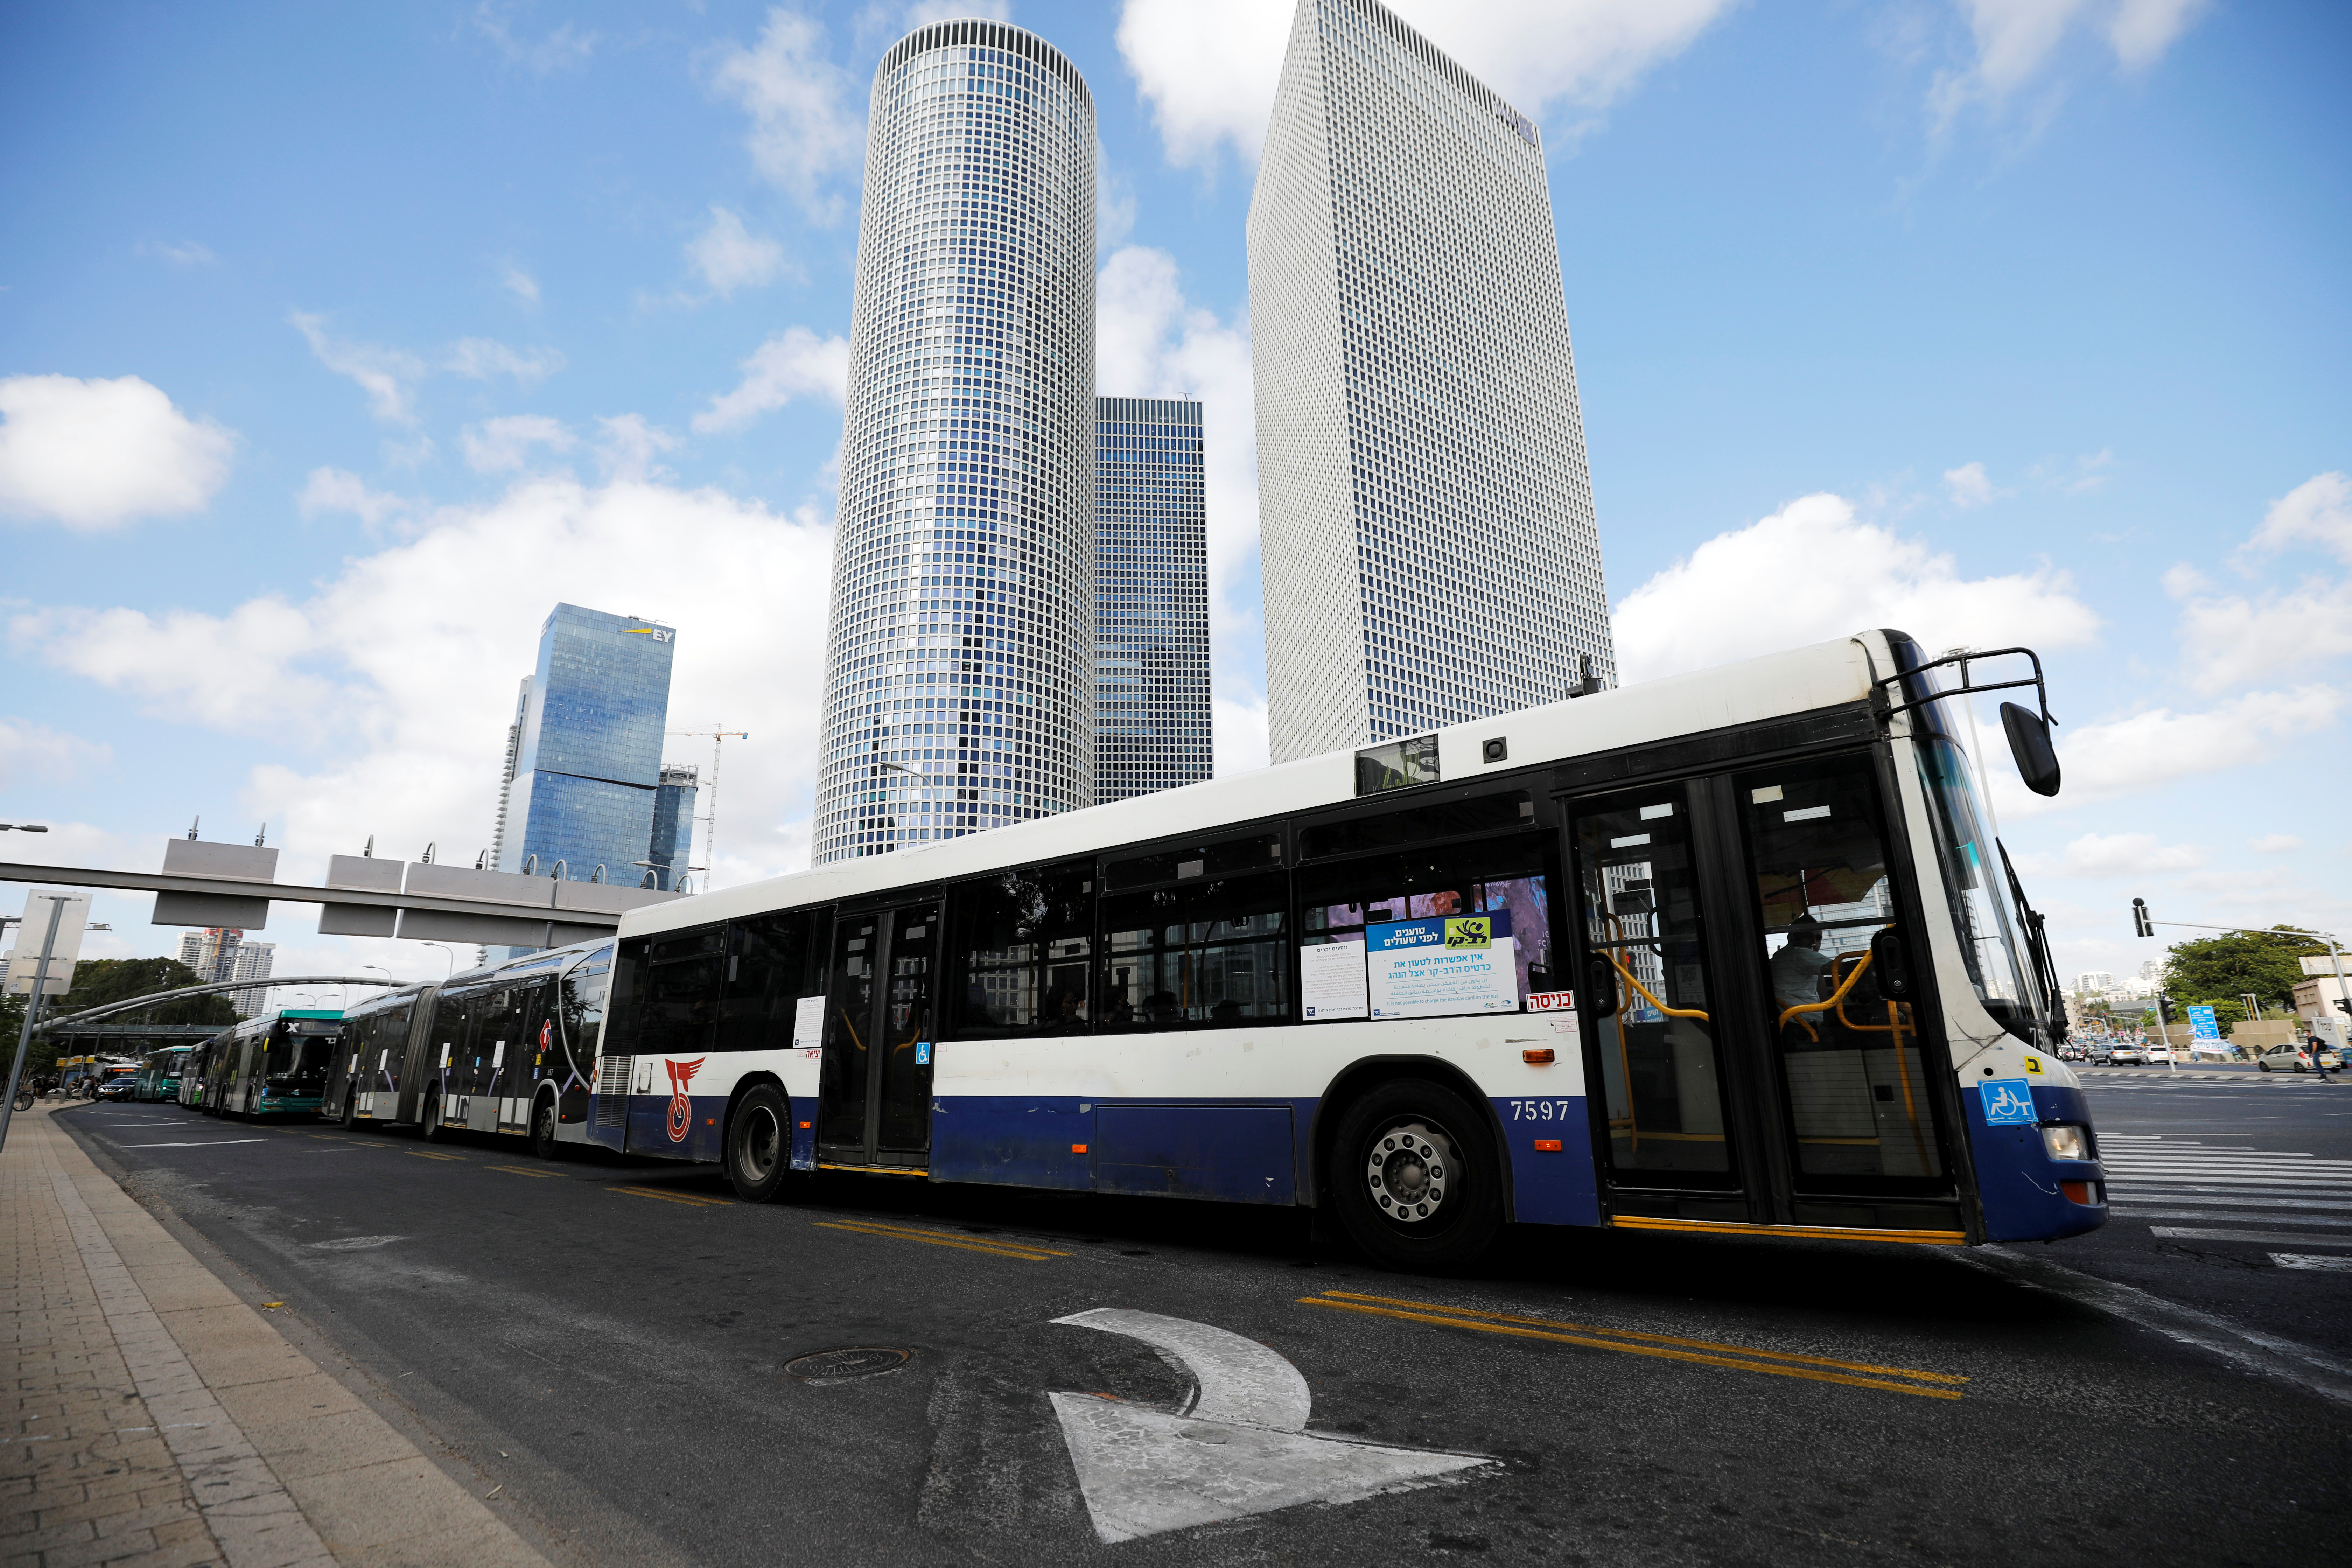 Buses travel past Azrieli Center in Tel Aviv, Israel